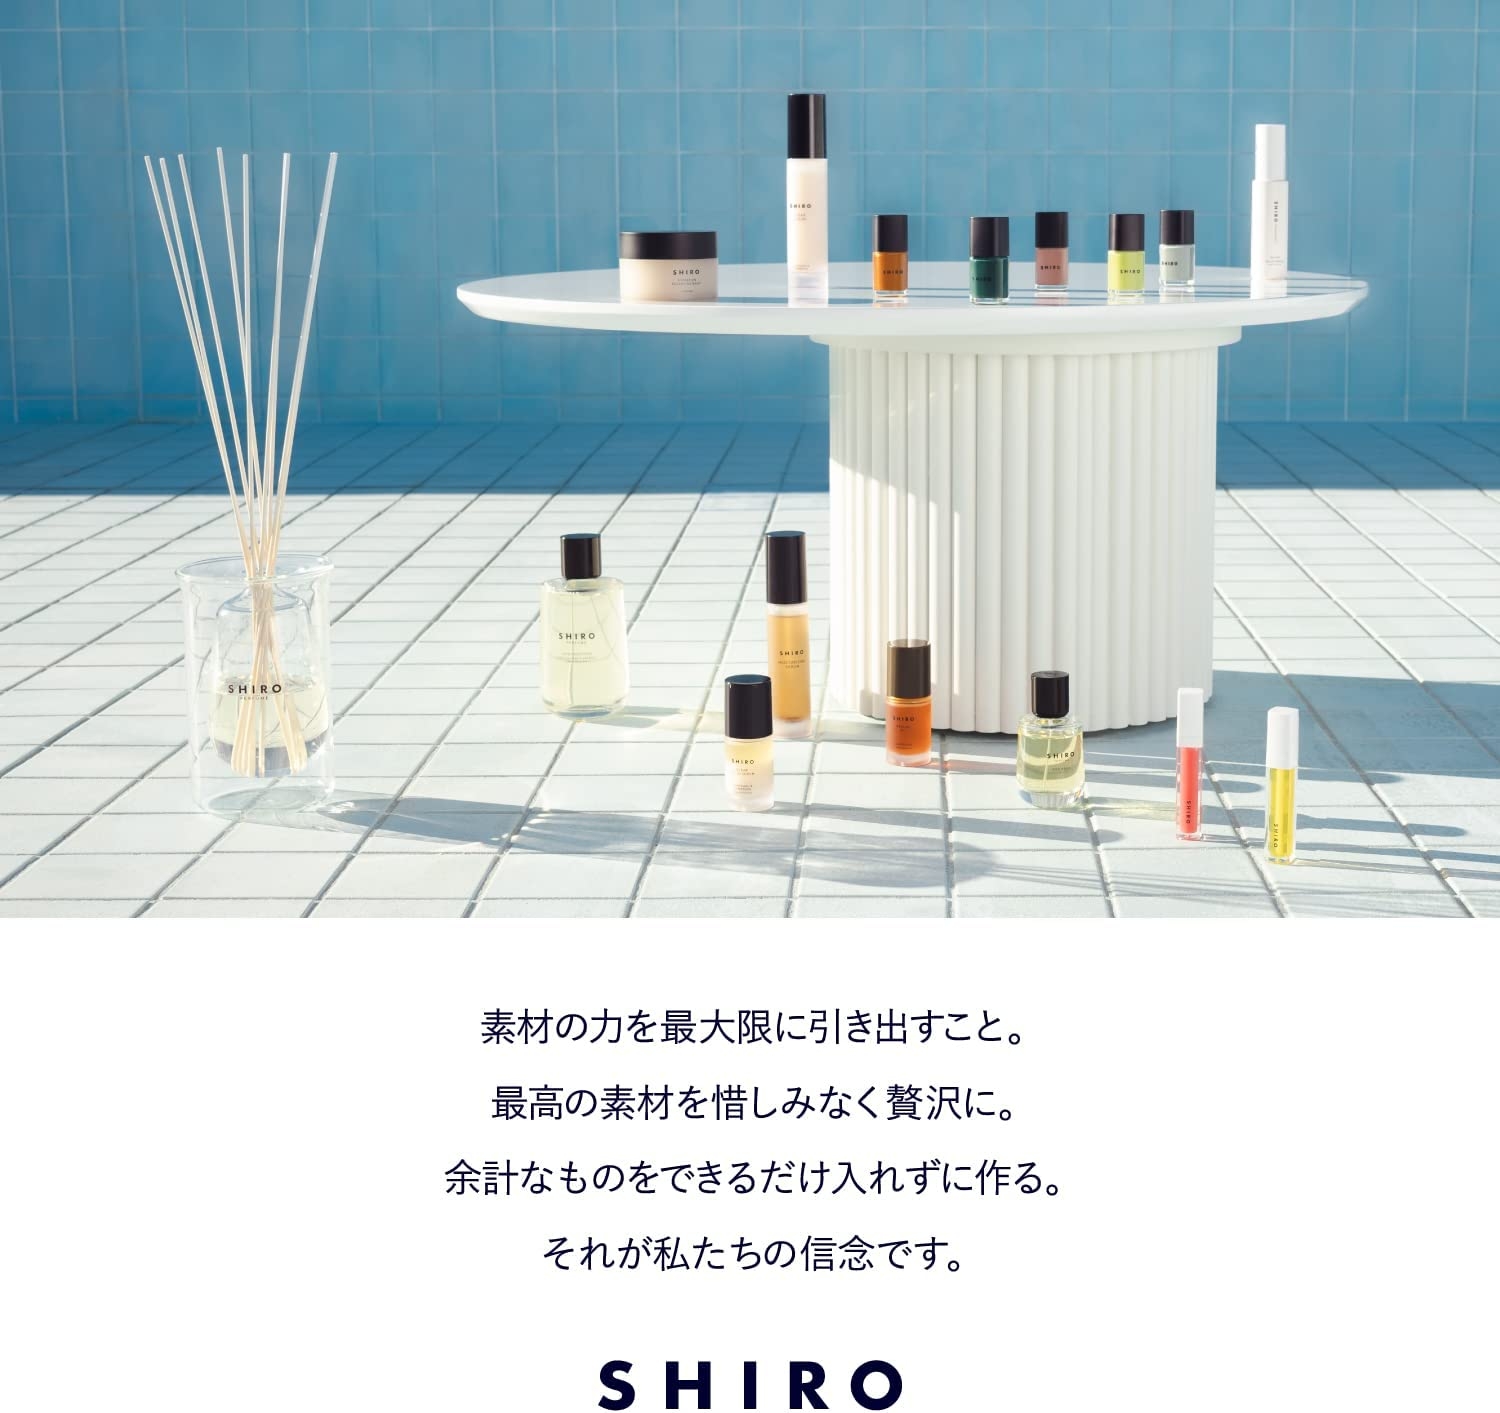 SHIRO(シロ) ボディコロンの商品画像サムネ3 